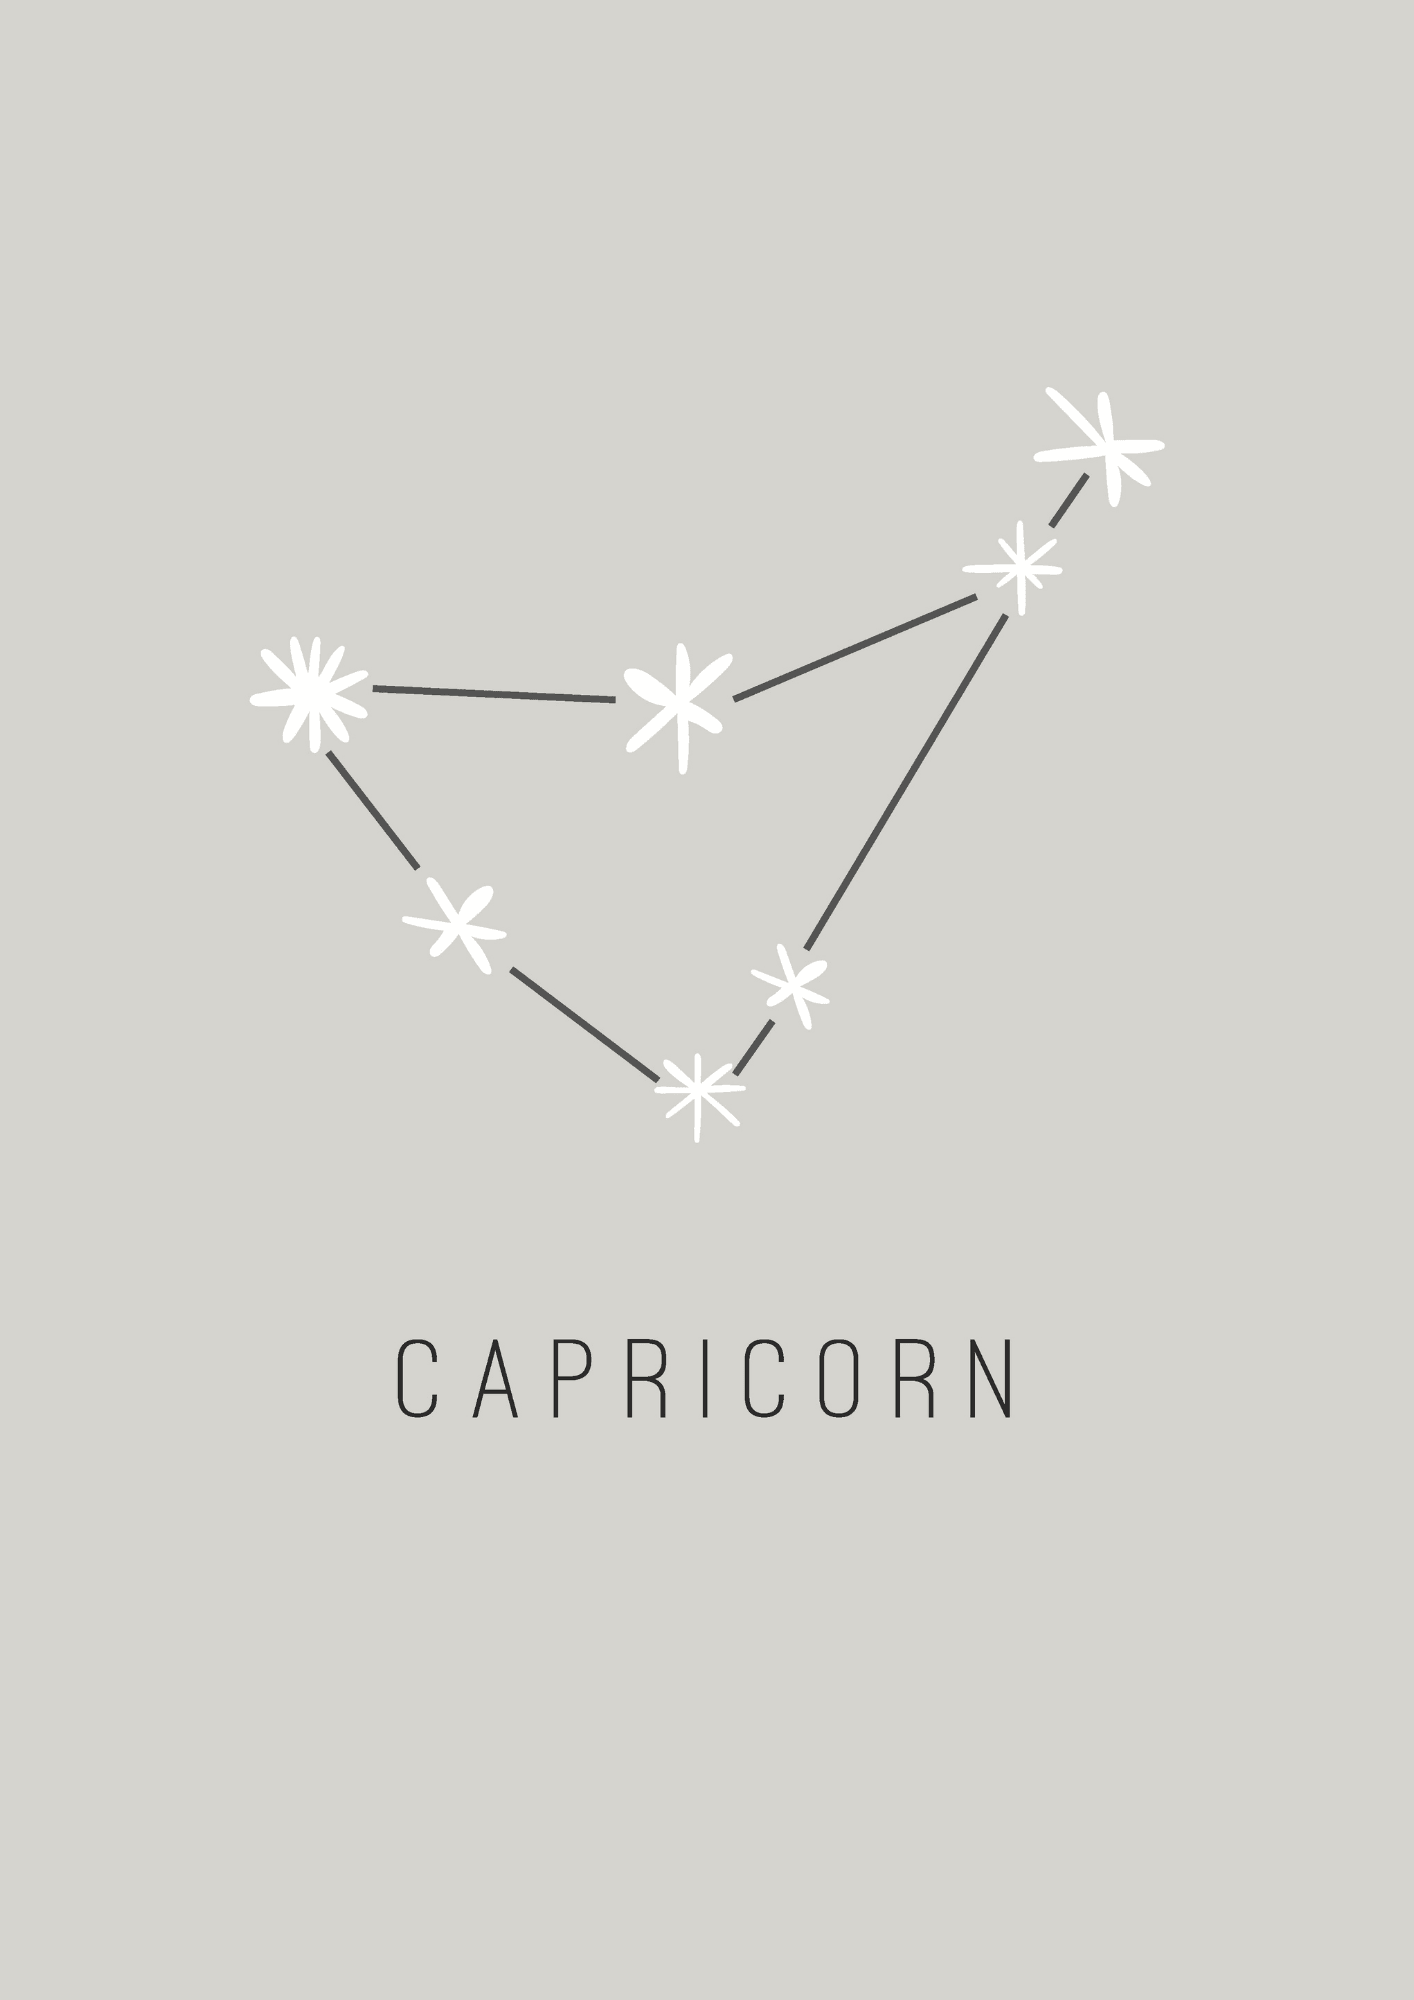 Capricorn Constellation - The Ditzy Dodo